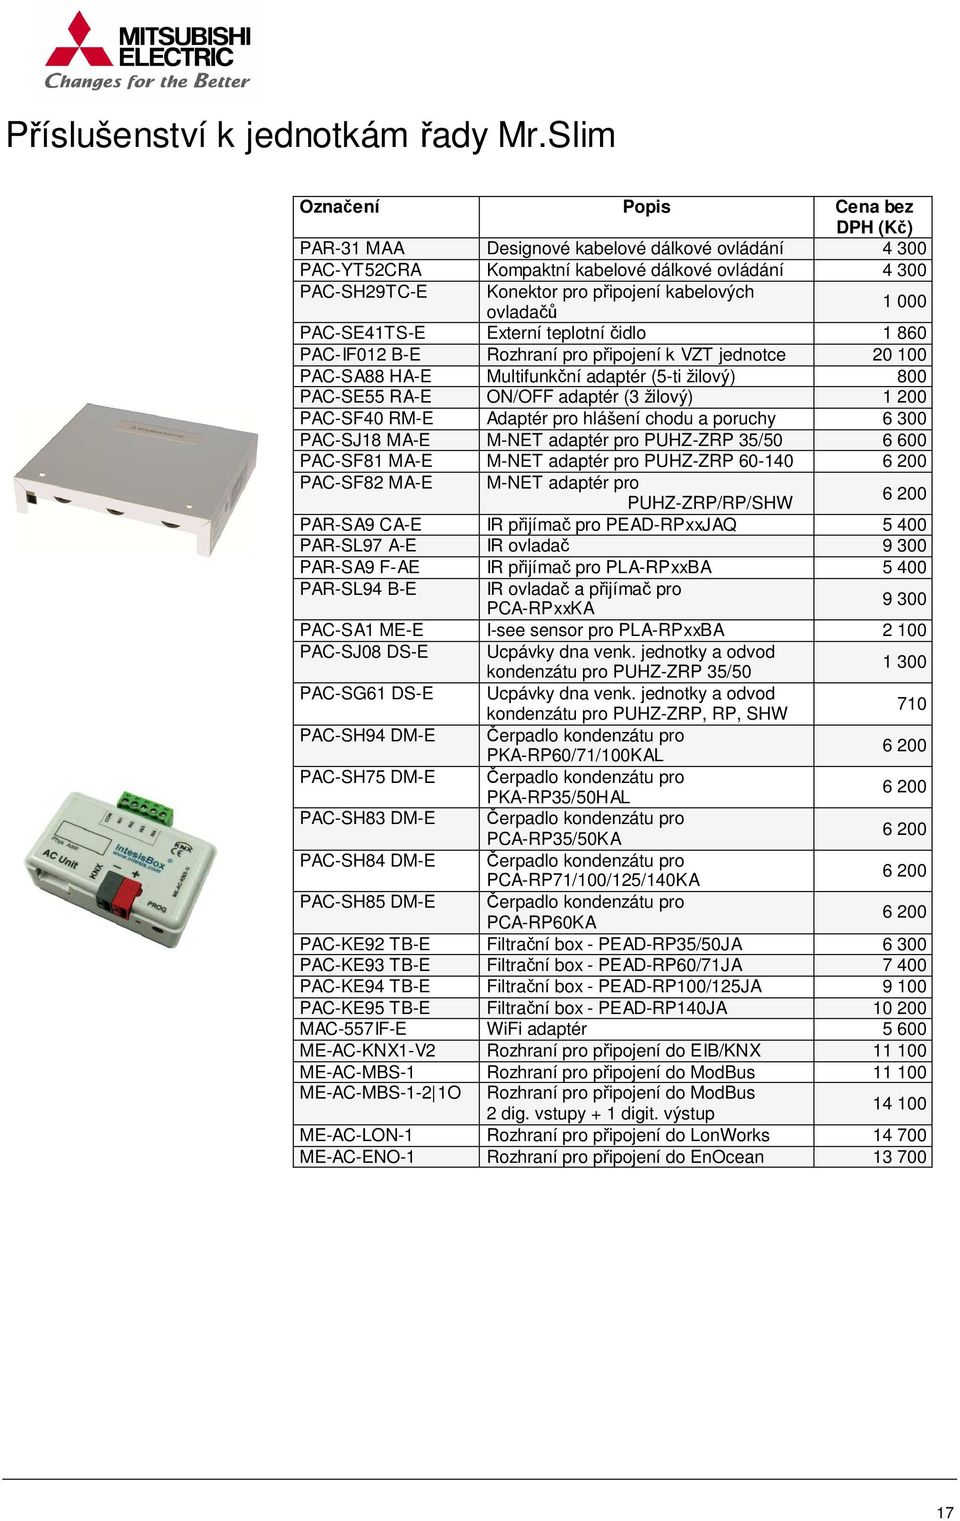 PAC-SE41TS-E Externí teplotní čidlo 1 860 PAC-I F 0 12 B-E Rozhraní pro připojení k V Z T j e d n o t c e 20 100 PAC-SA88 HA-E Multifunkční adaptér (5-ti žilový) 800 PAC-SE55 RA-E ON/OFF adaptér (3